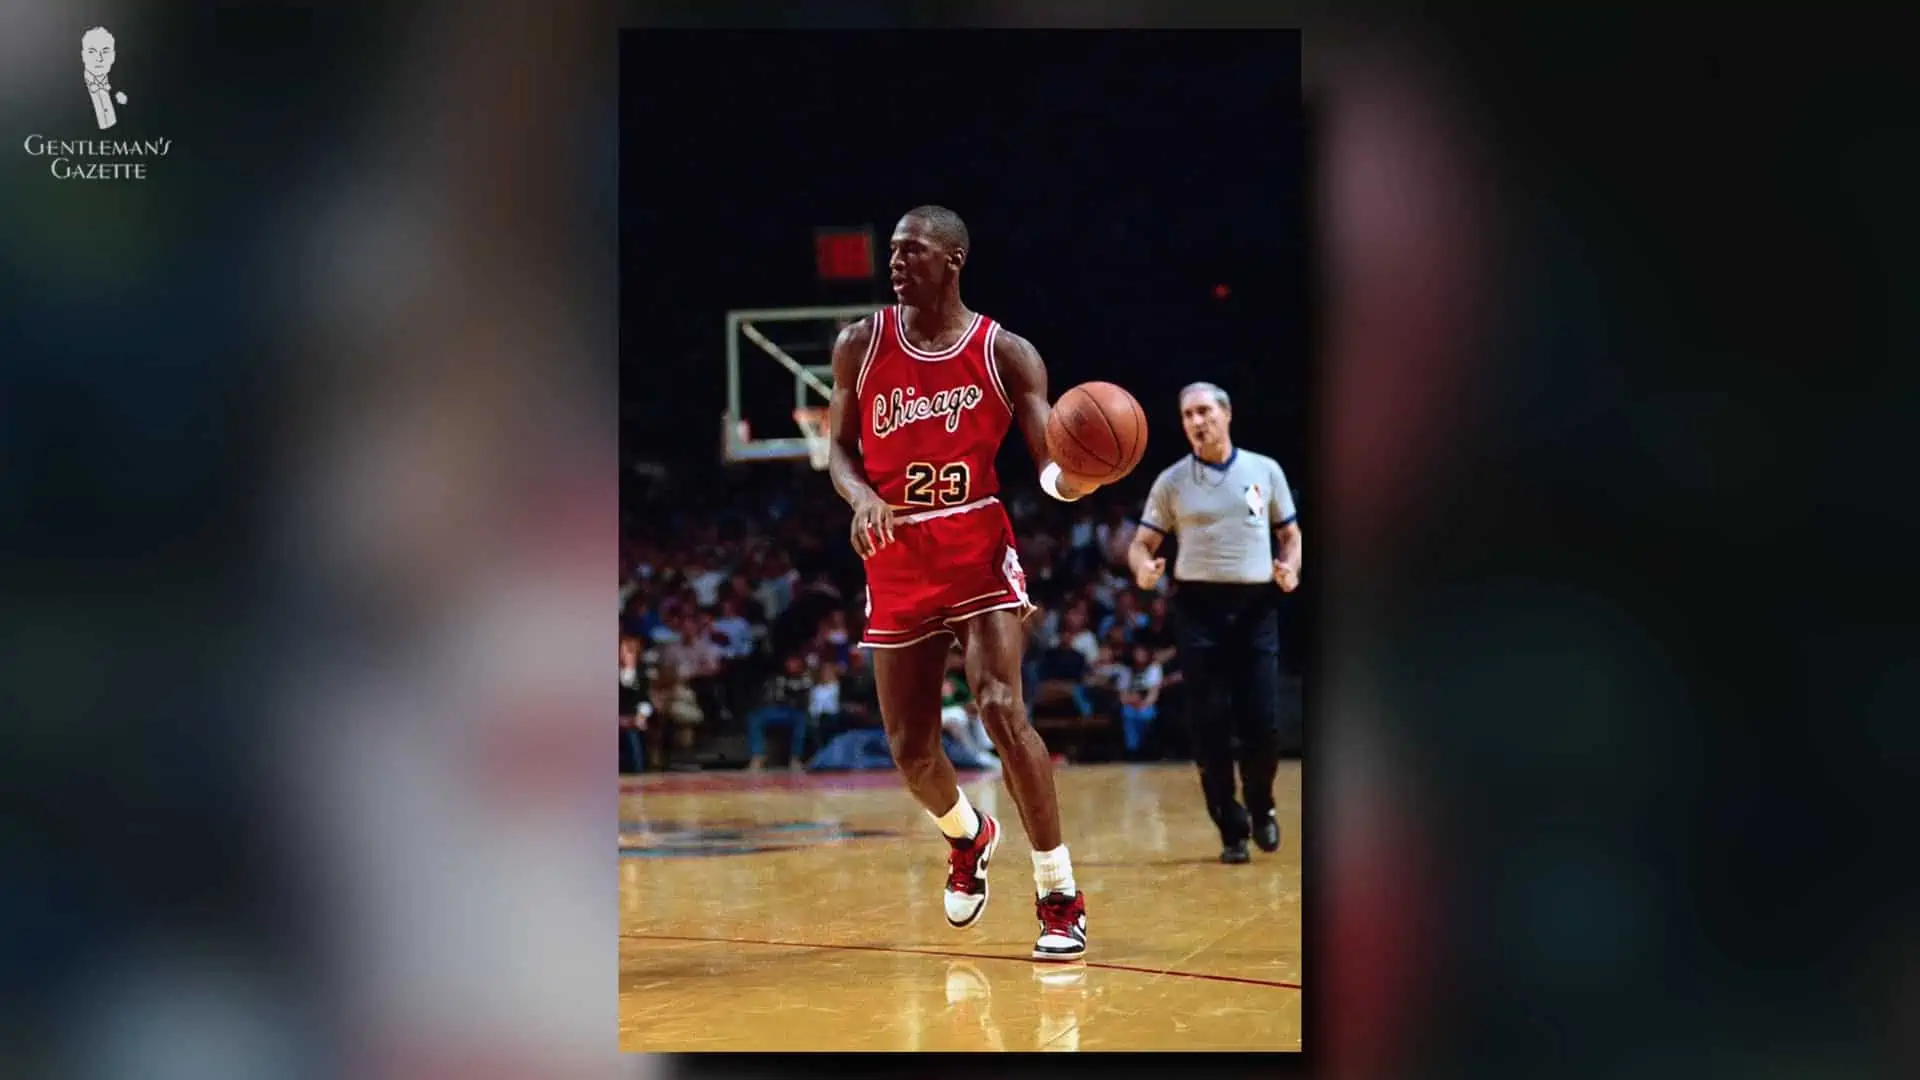 Michael Jordan wearing a pair of red and white Nike Air Jordans while playing basketball.